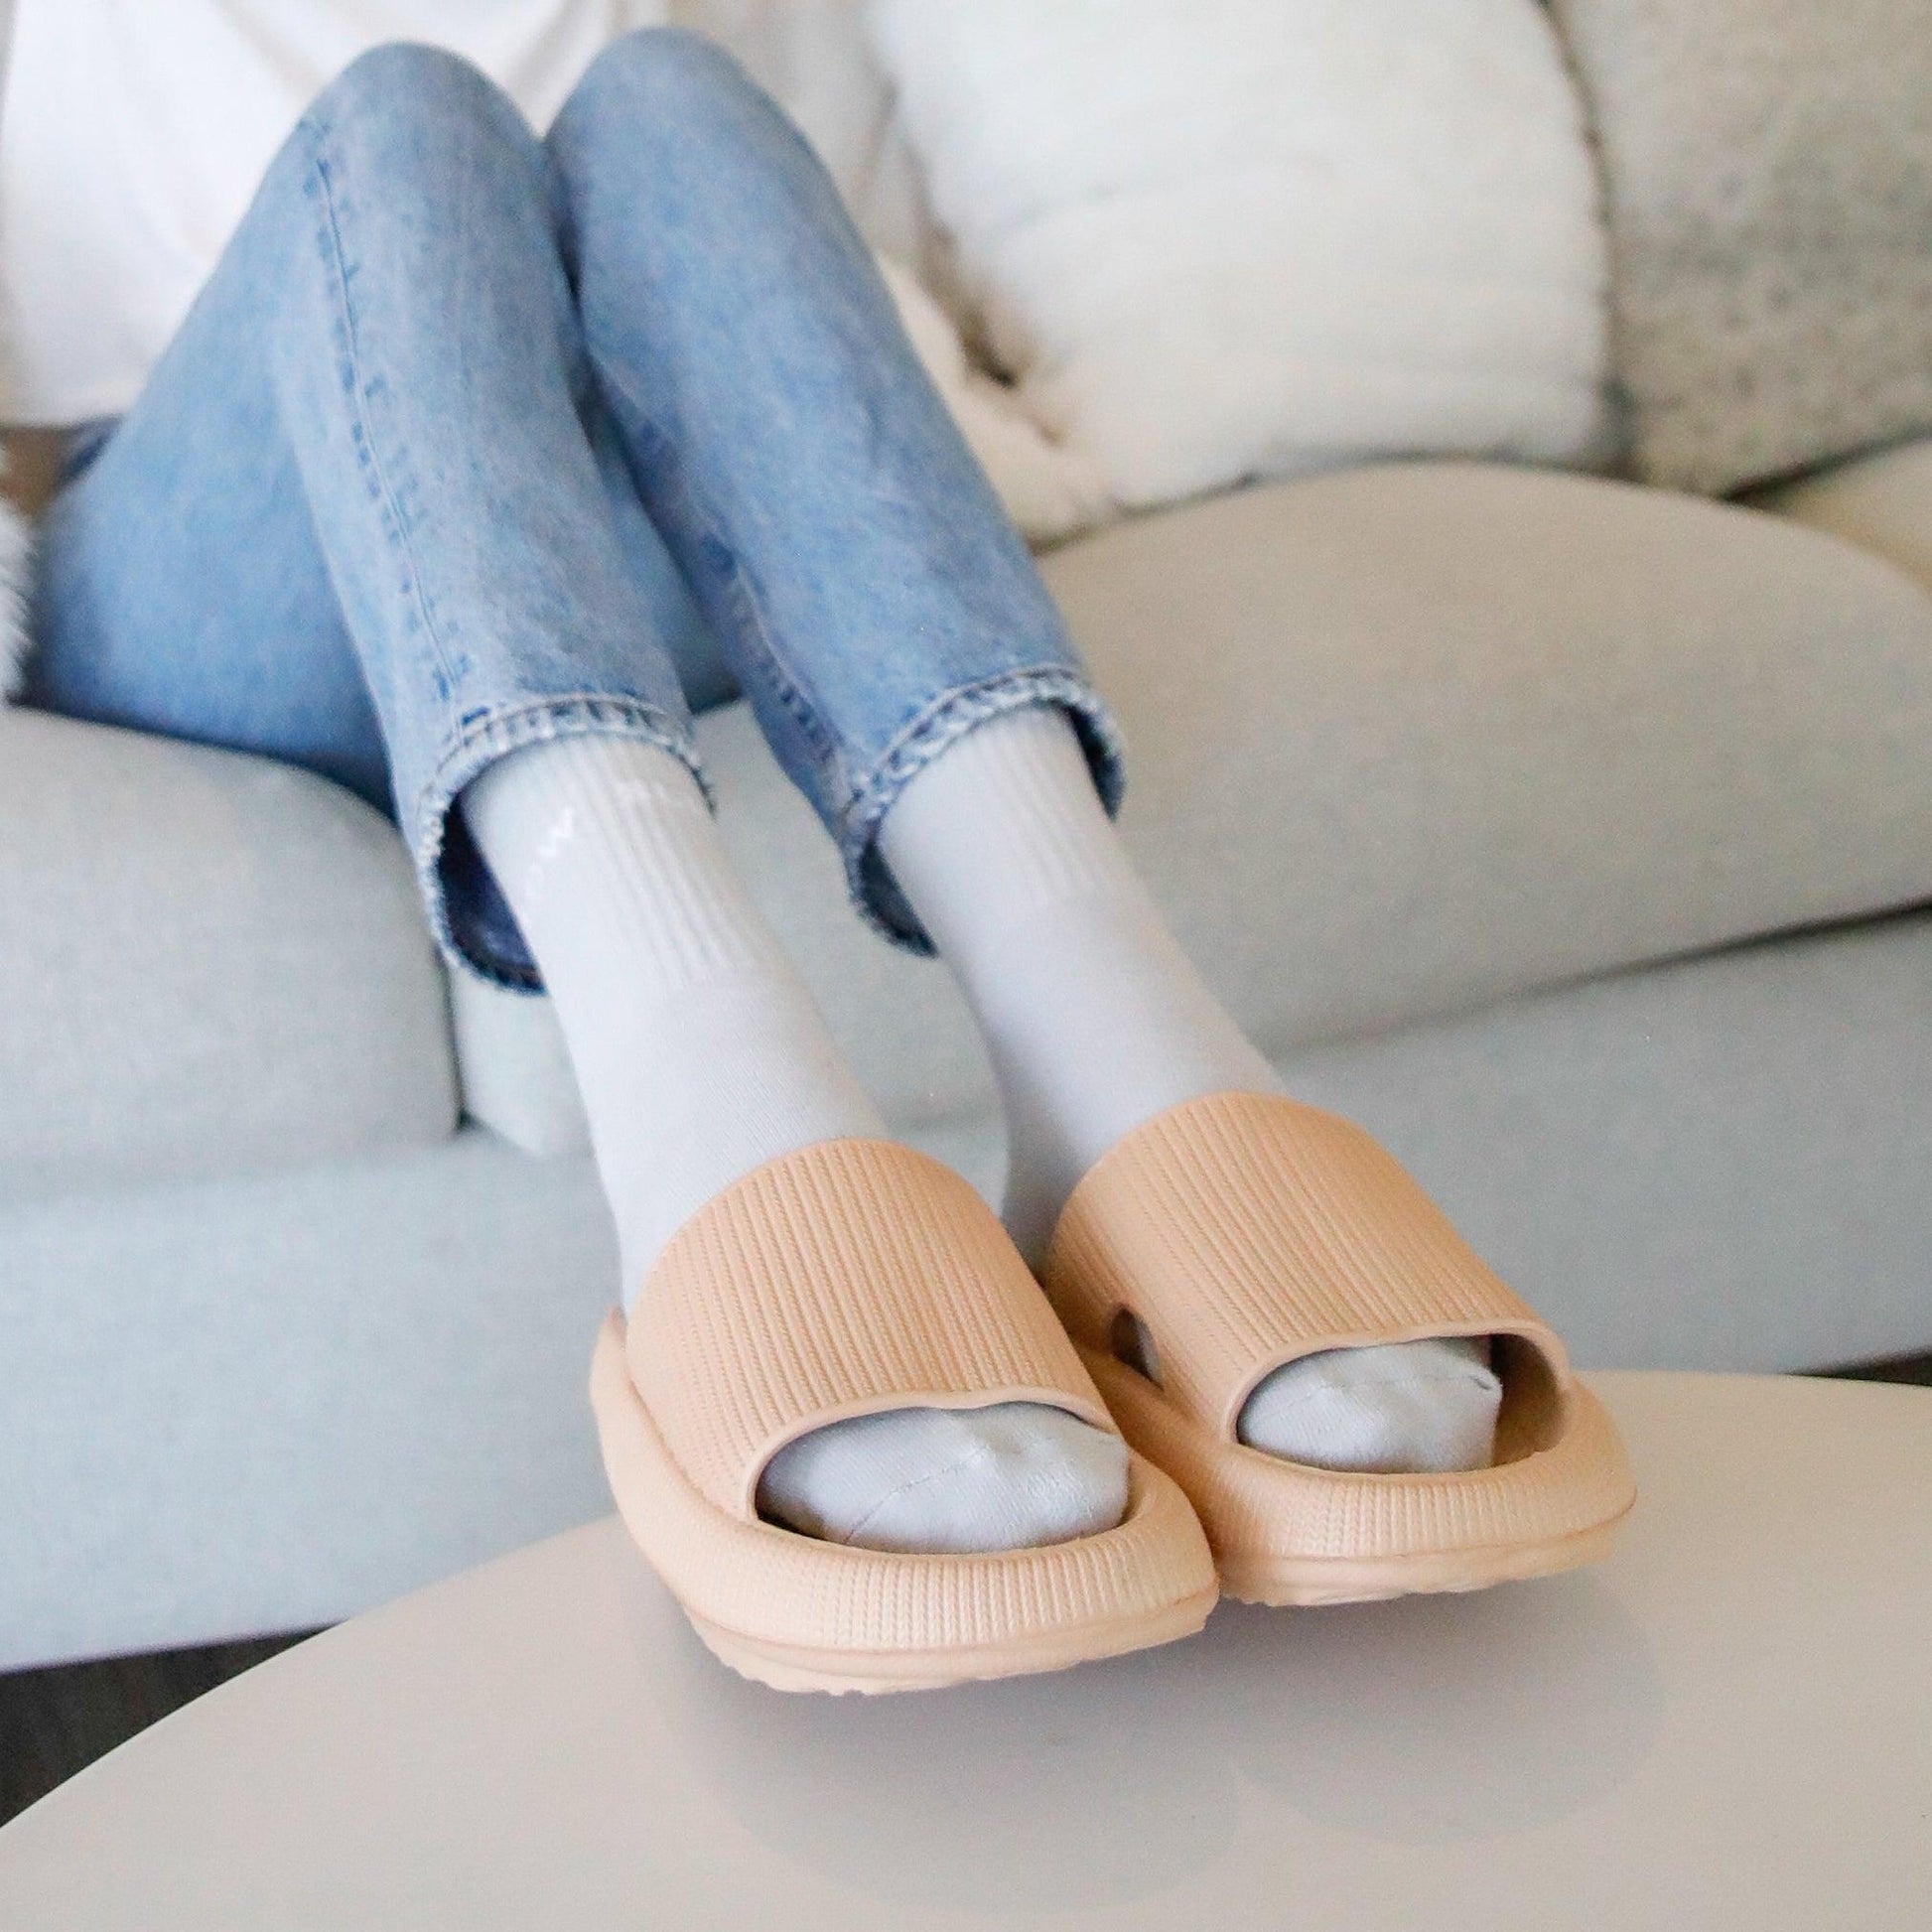 Grey socks in tan slippers on living room table